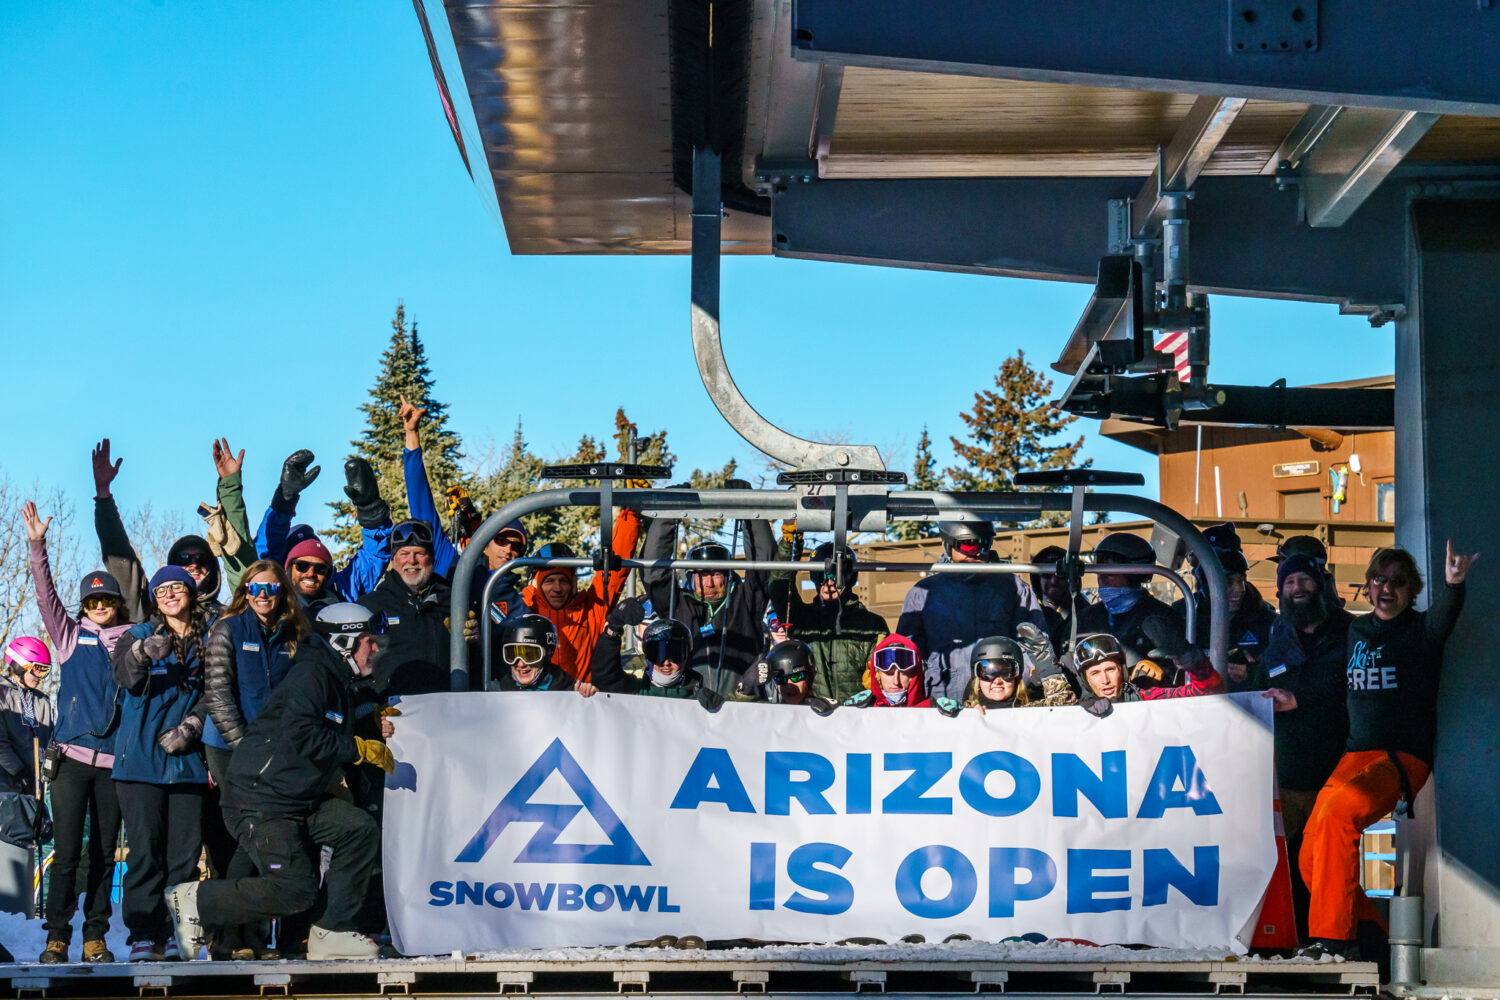 Read more: Arizona Snowbowl is Open!